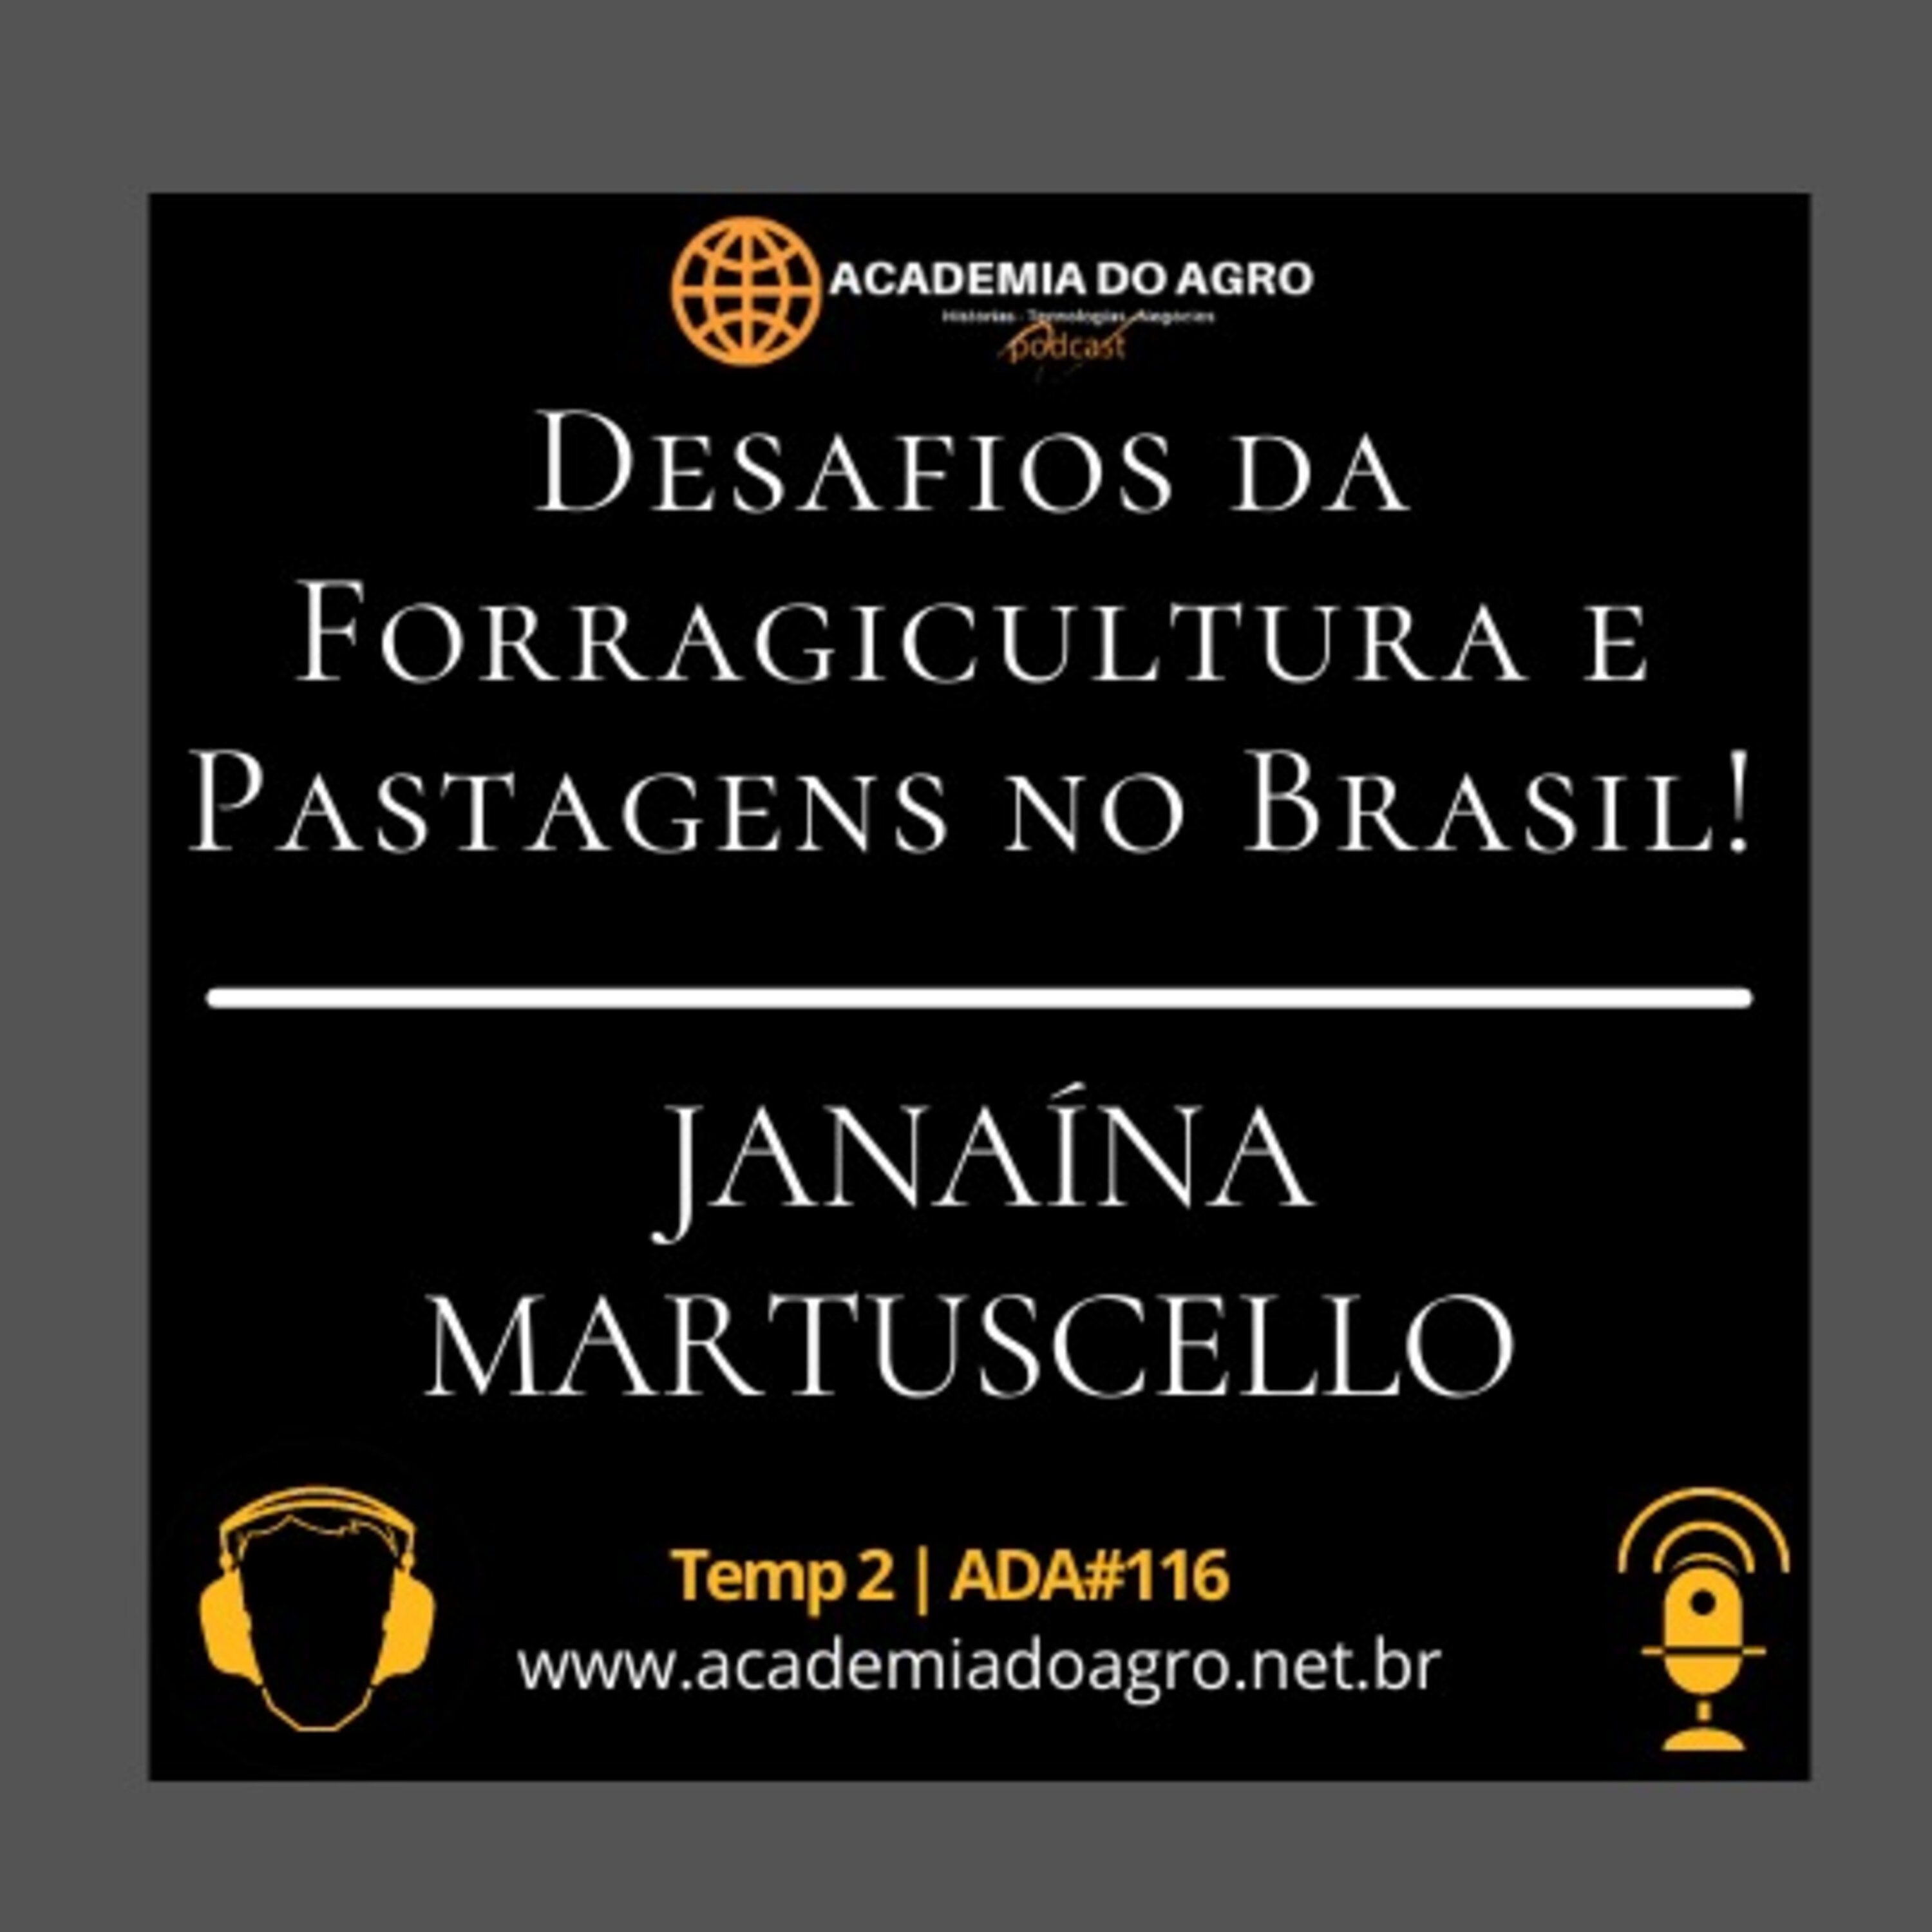 Desafios da Forragicultura e Pastagens no Brasil!